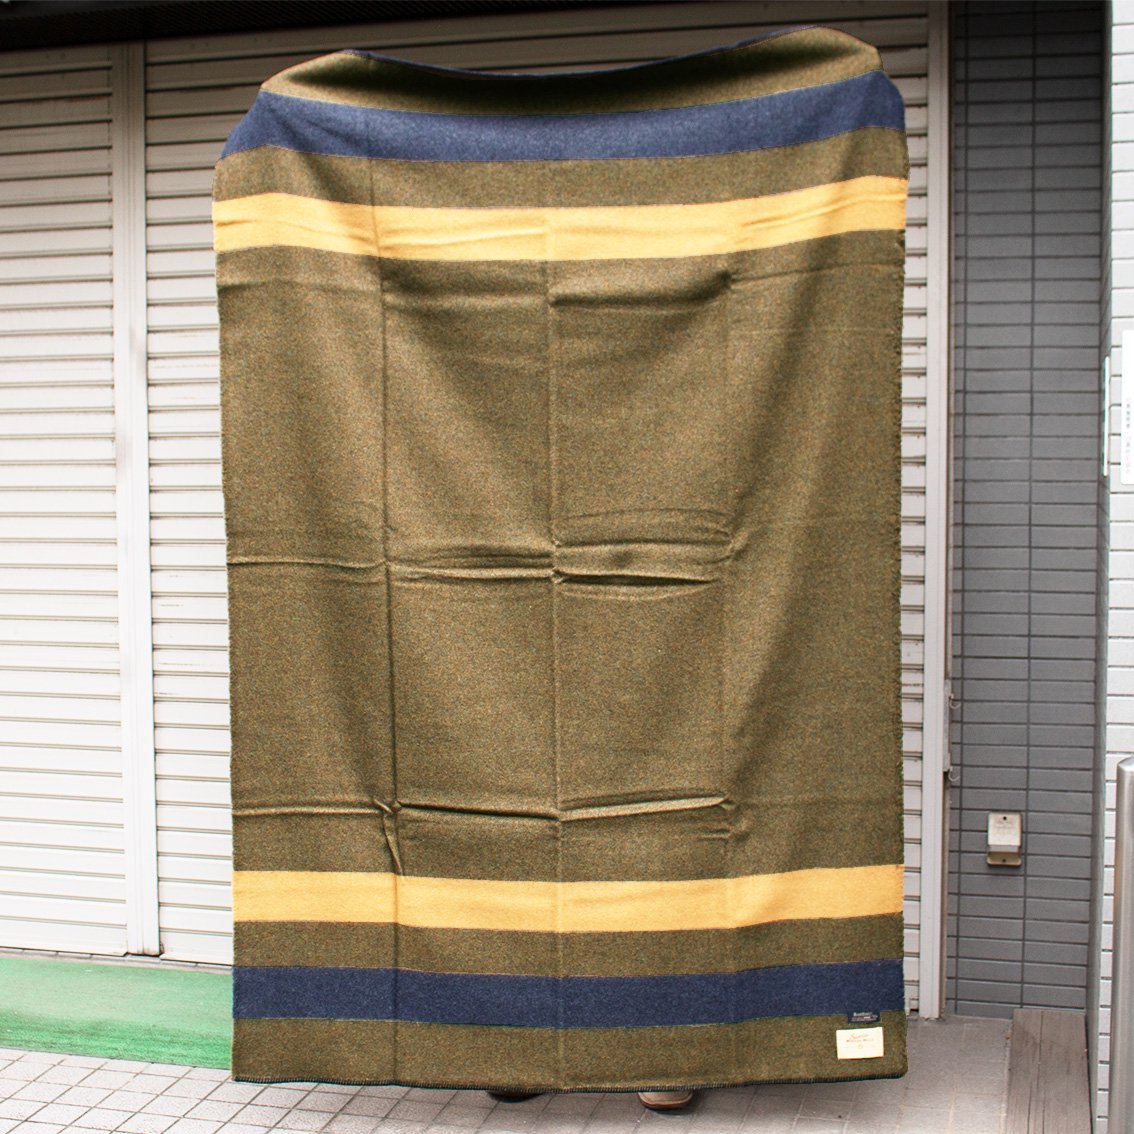 BasShu / バッシュ] Wool Blanket ウールブランケット 130×180 